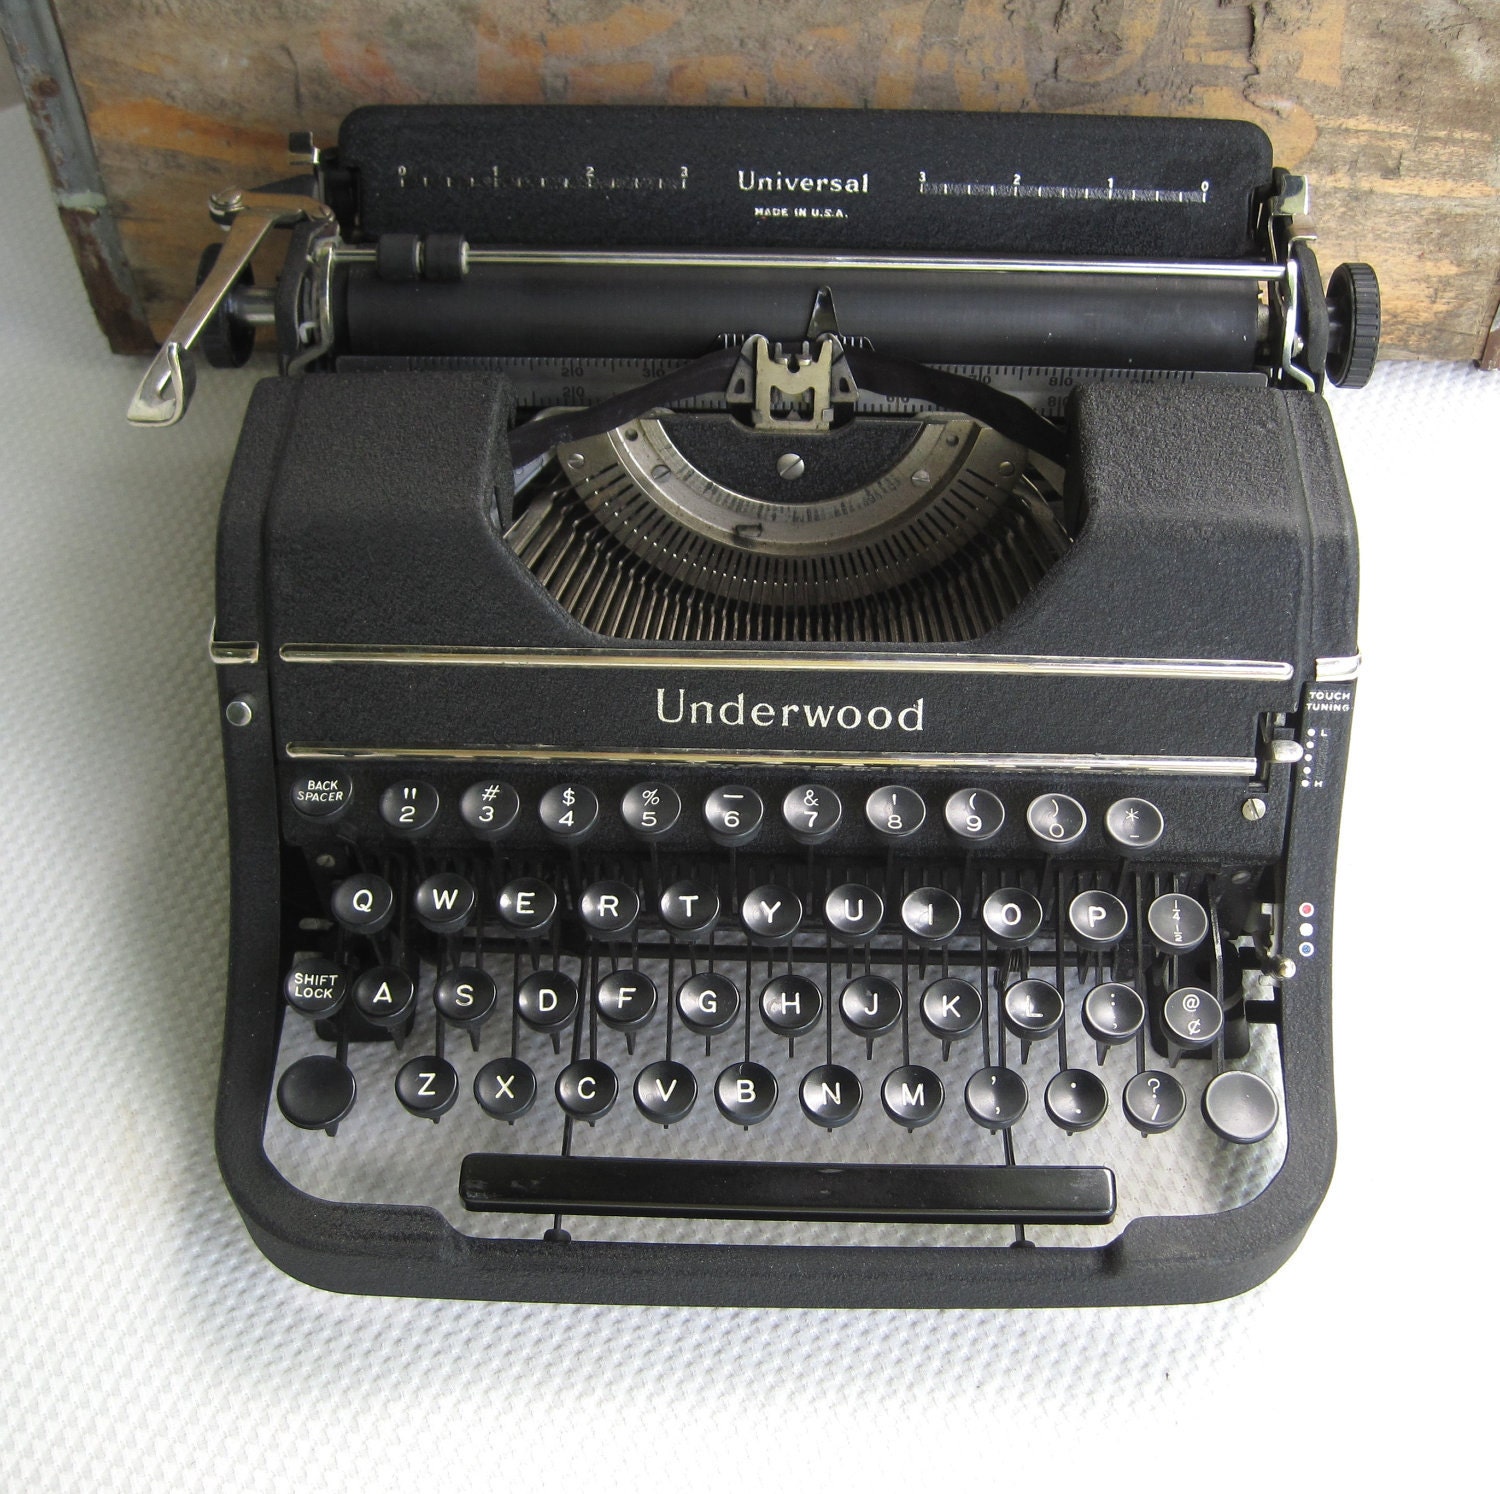 Underwood Universal Typewriter Serial Number